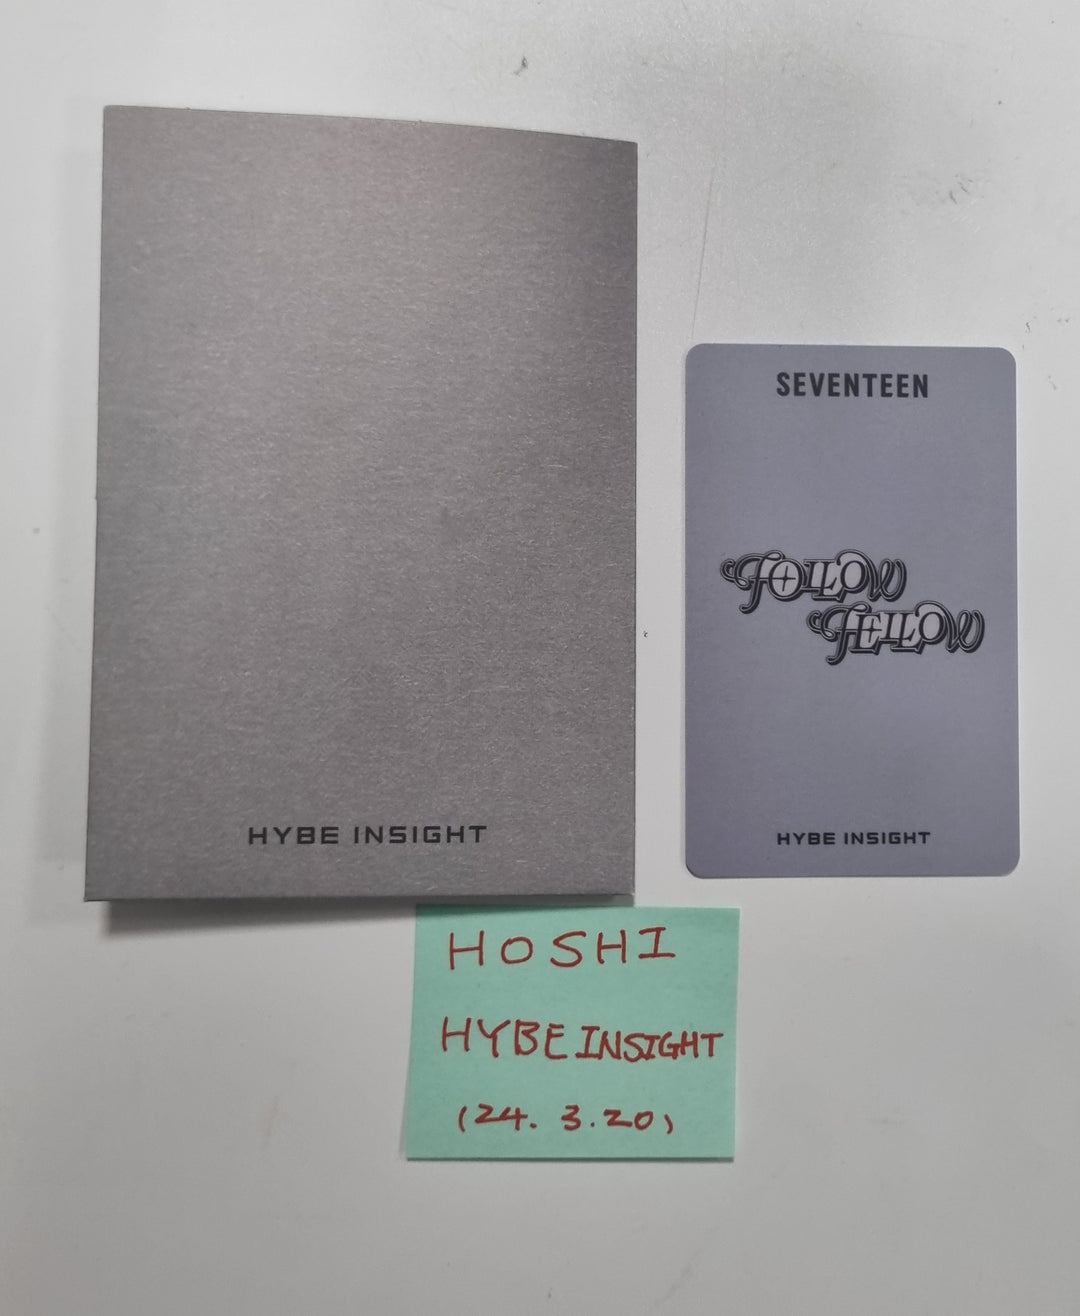 HOSHI (Of Seventeen) - Hybe Insight "Follow Fellow" Exhibition Ticket PVC Photocard [24.3.20]